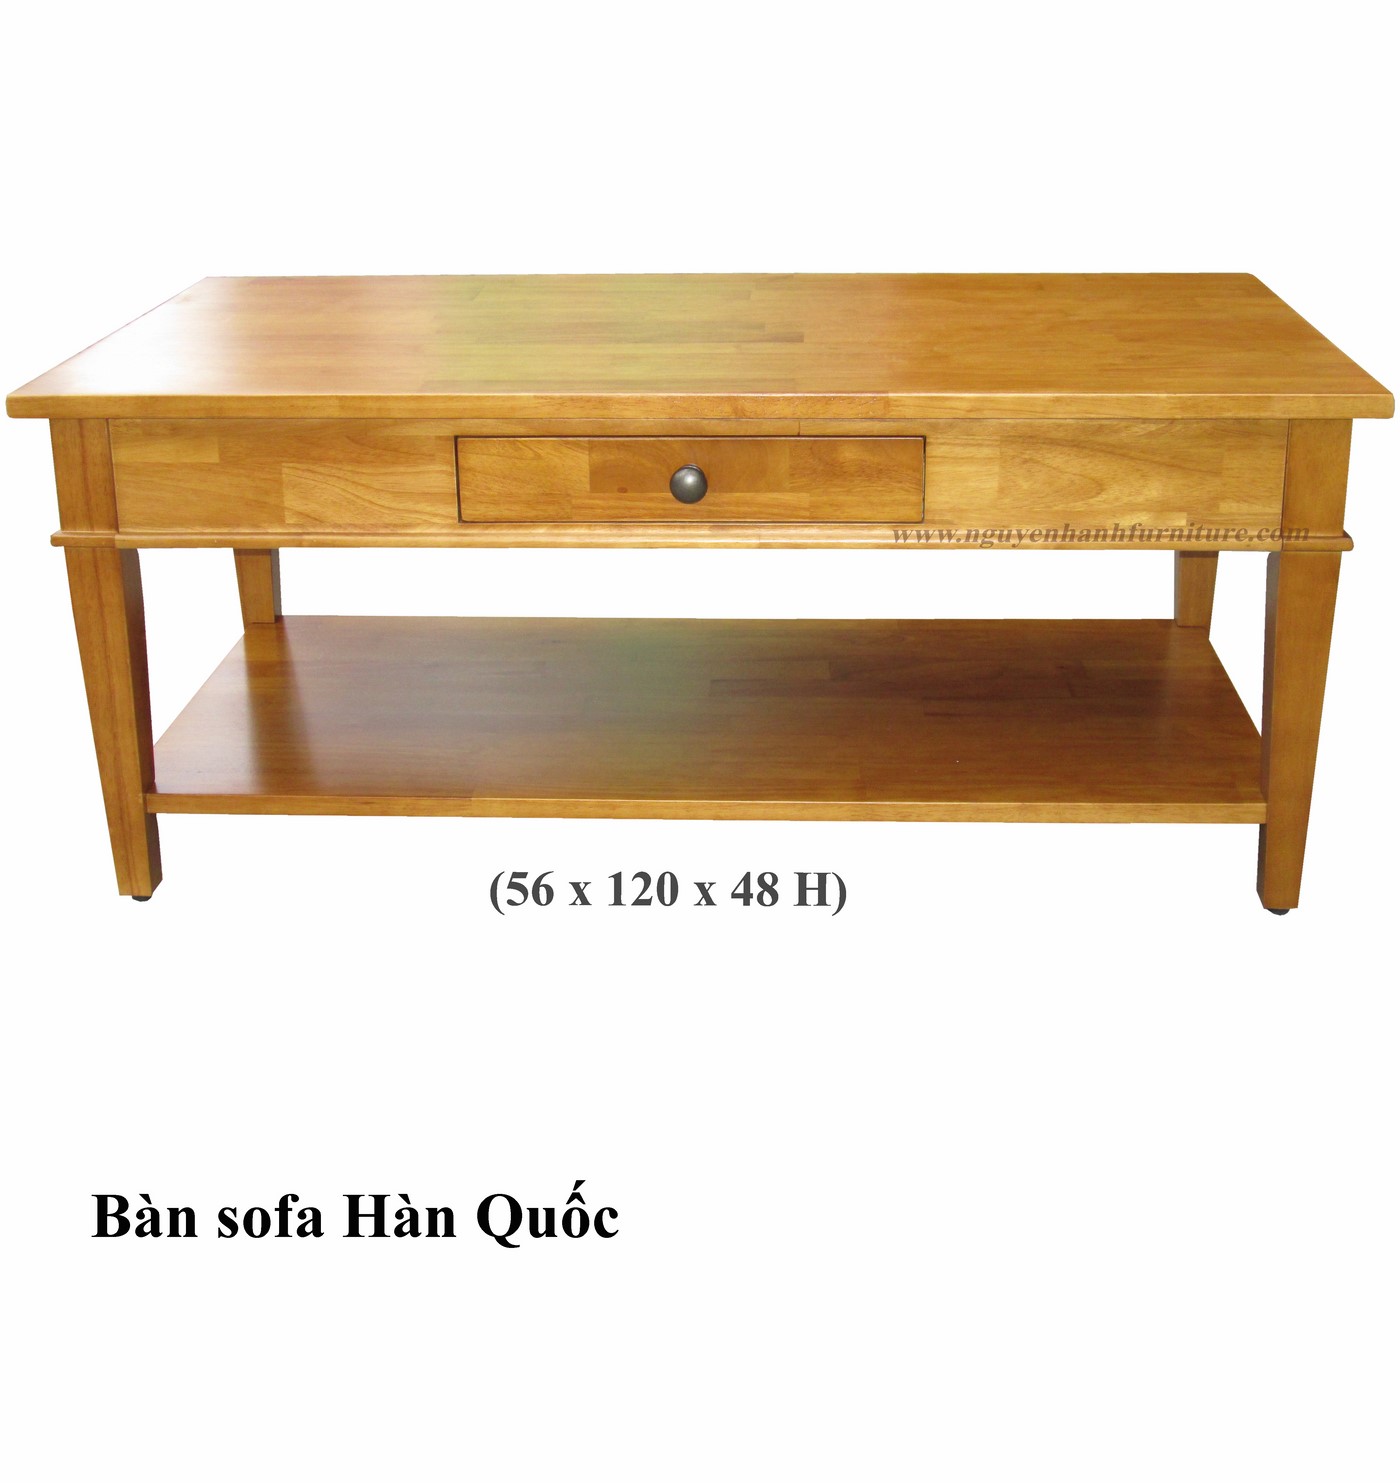 Name product: Sofa table Korea - Yellow Color - Dimensions: 56 x 120 x 48 - Description: Wood natural rubber